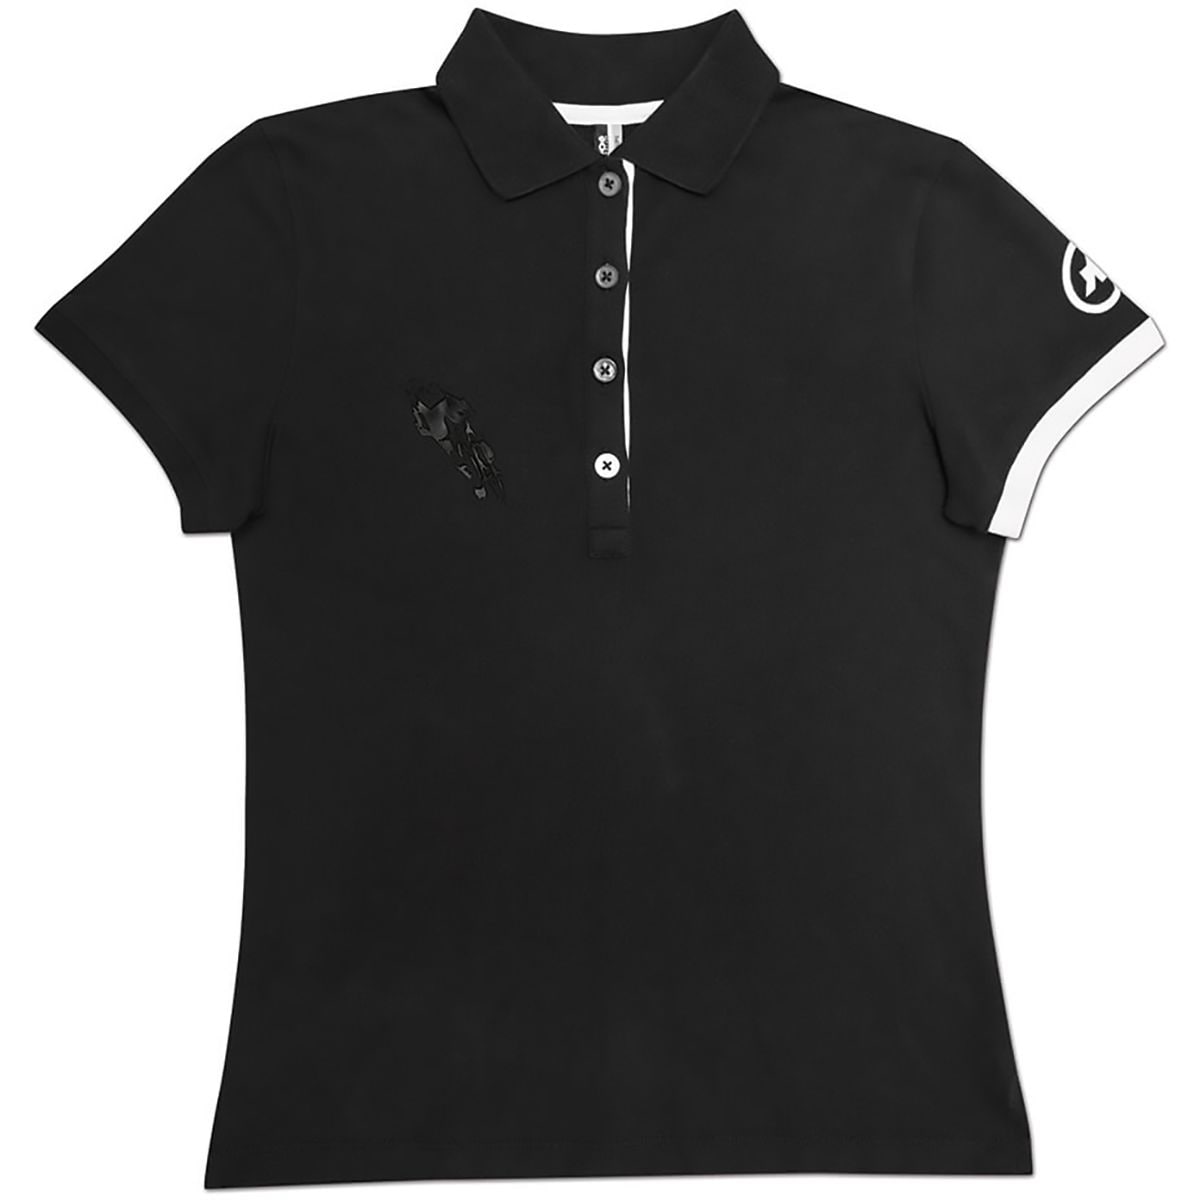 Assos Corporate Lady Polo Shirt Women's